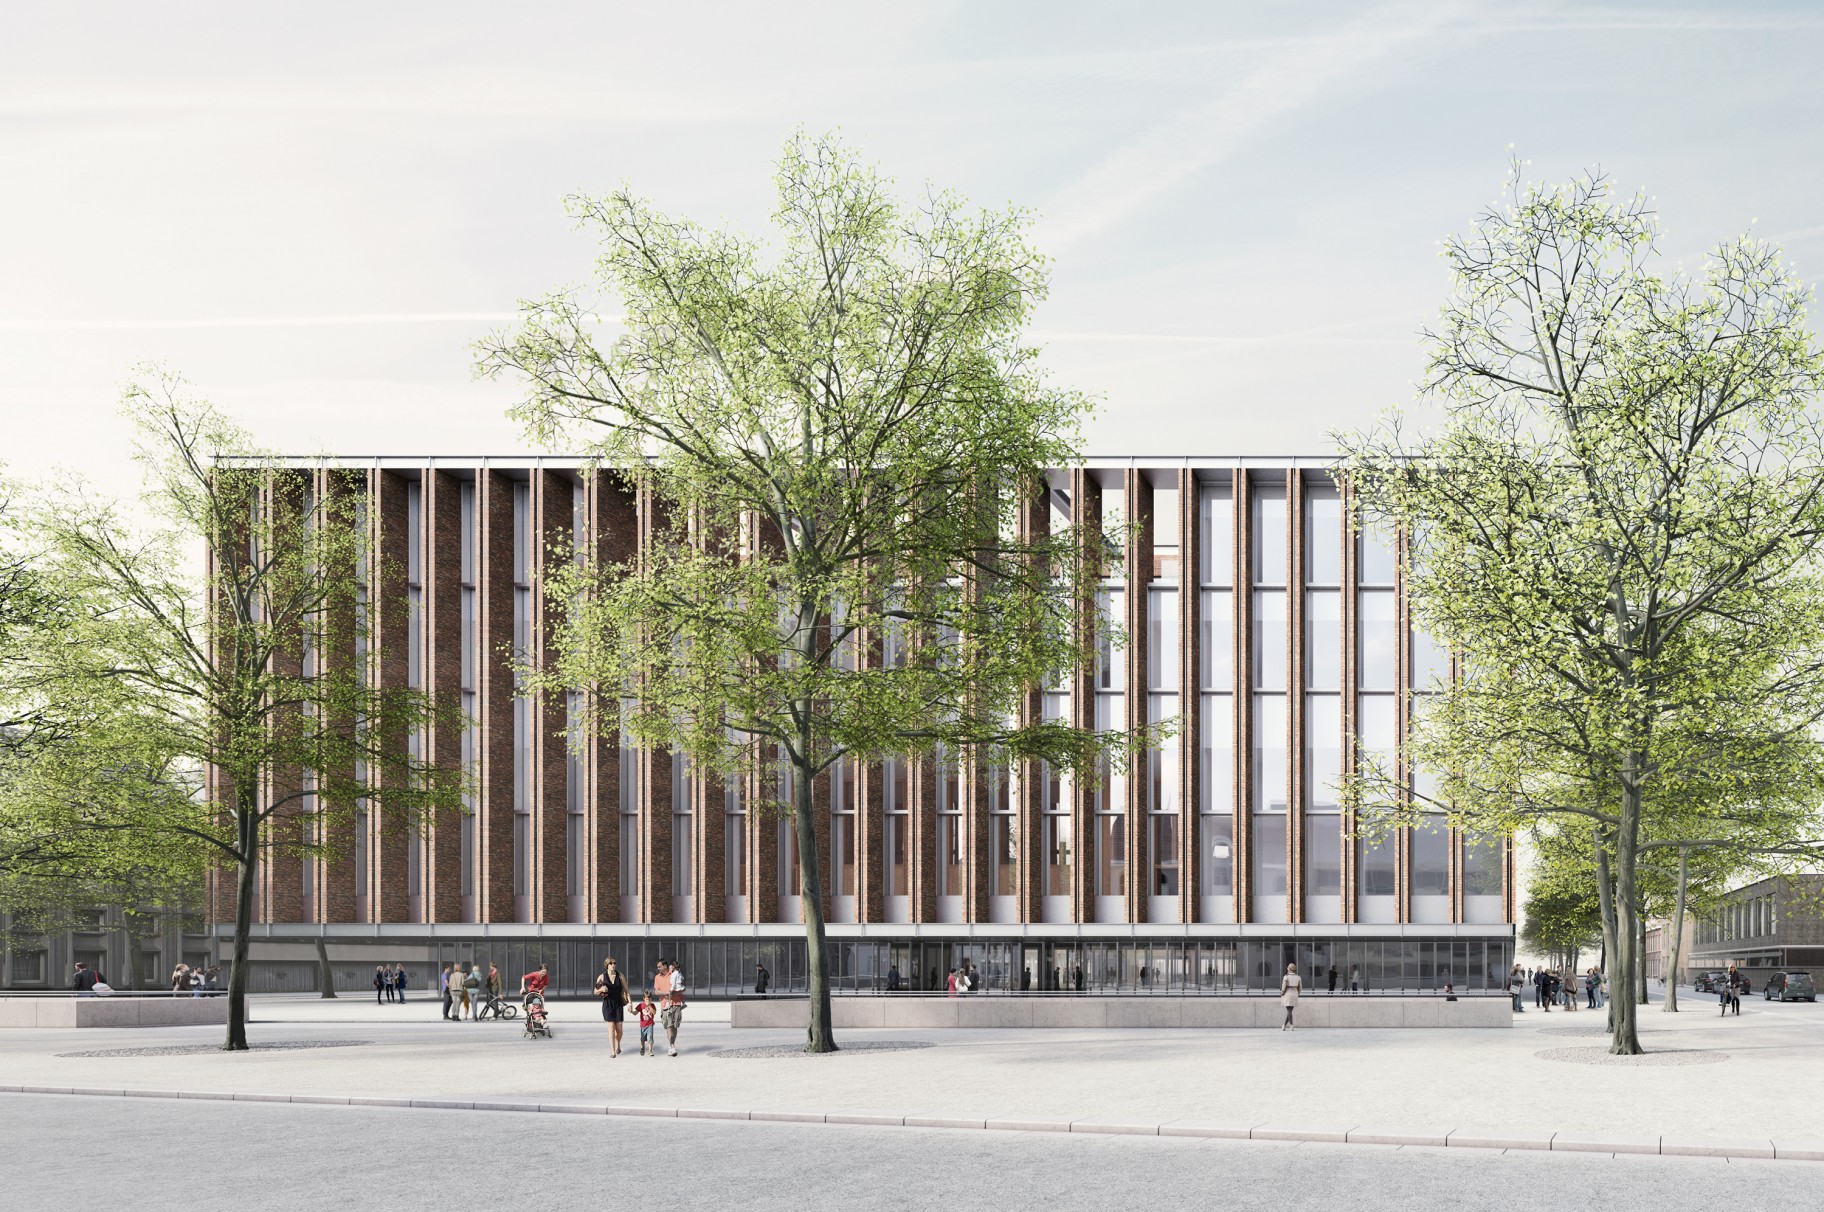 Eduardo Souto de Moura and META architectuurbureau design the Bruges Meeting & Convention Centre urban renewal project in Bruges